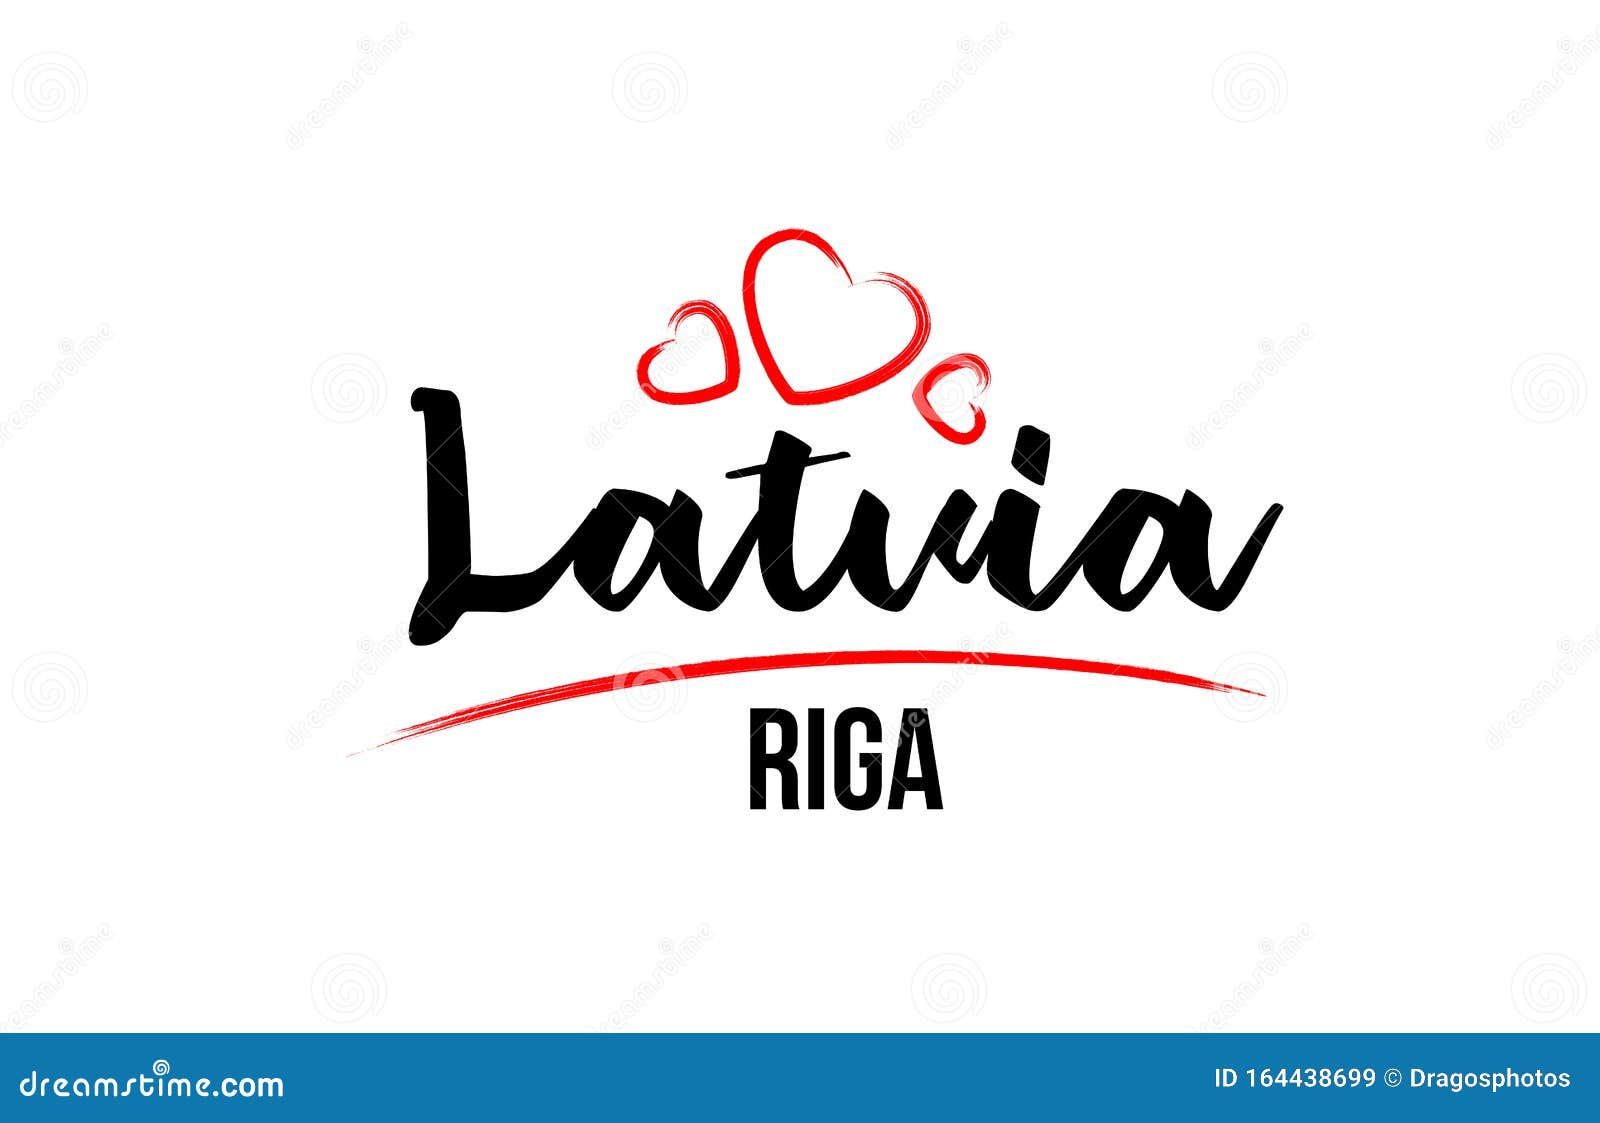 681 Latvia Logo Stock Illustrations, Vectors & Clipart - Dreamstime